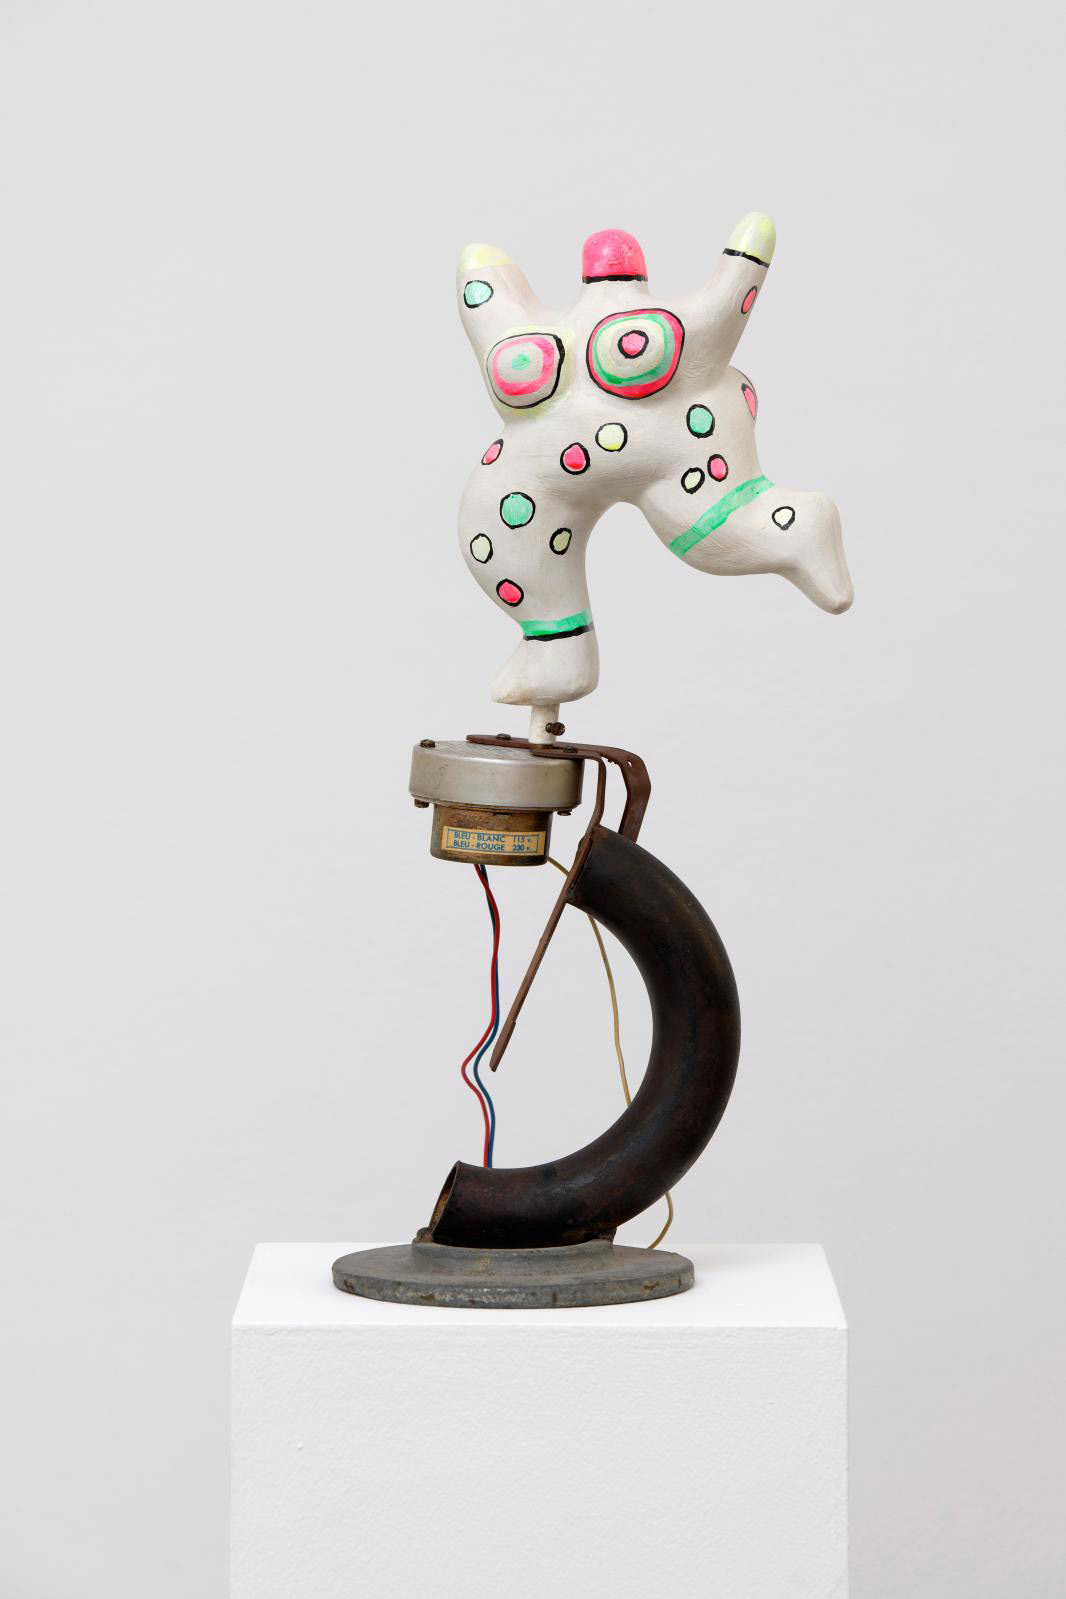 Niki de Saint Phalle (1930-2002), Nana Machine, 1976, painted polyester, iron base, electric motor by Jean Tinguely (1925-1991), 44 x 15 x 15 cm/17.32 x 5.90 x 5.90 in. © Niki Charitable Art Foundation, Courtesy Galerie Mitterrand Photo: A. Mole